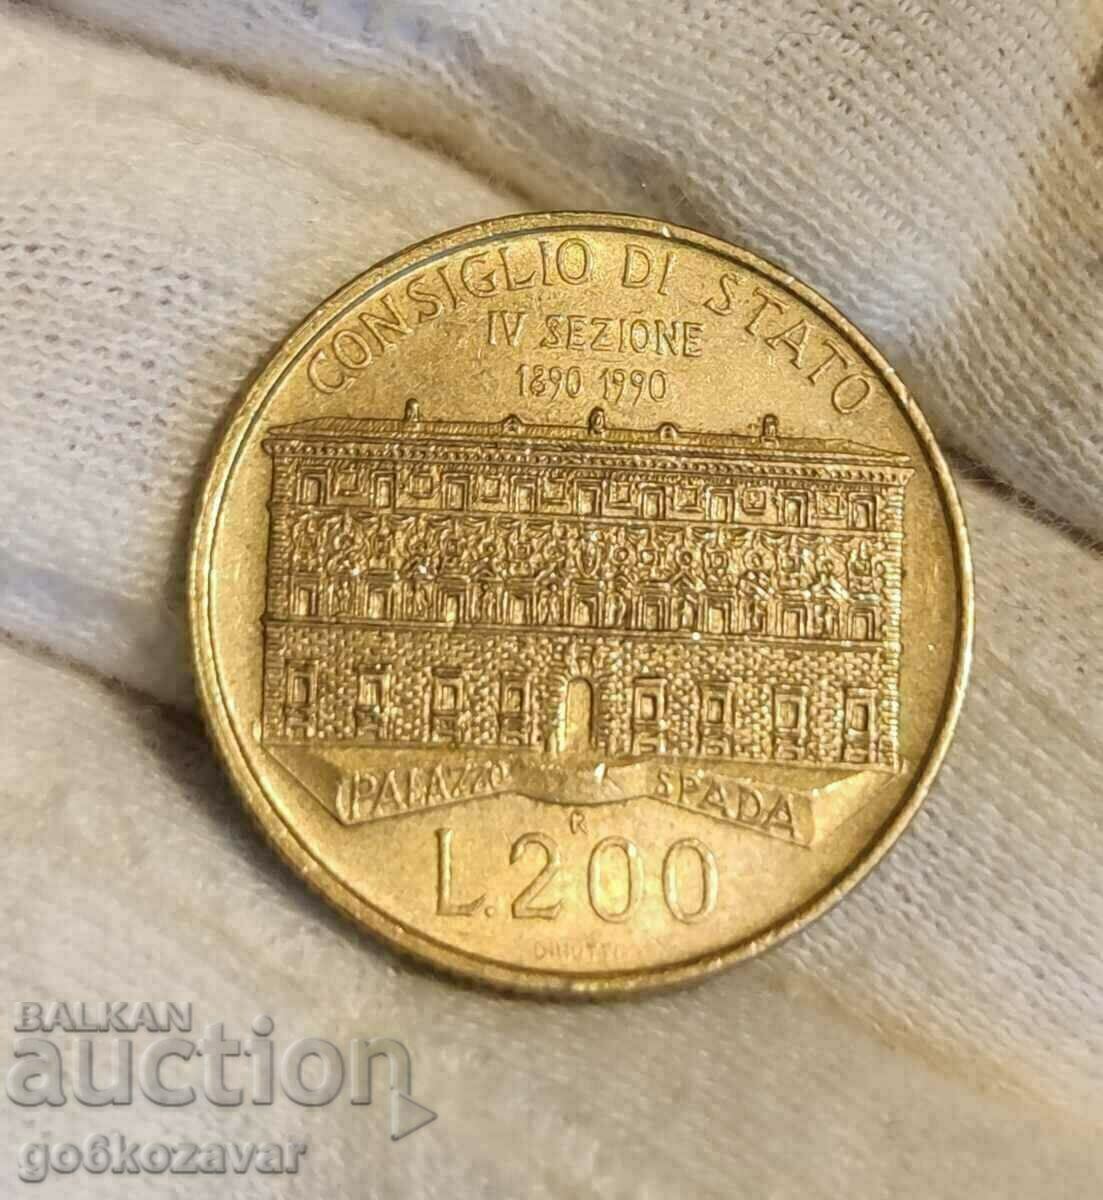 Italia 200 de lire sterline 1990